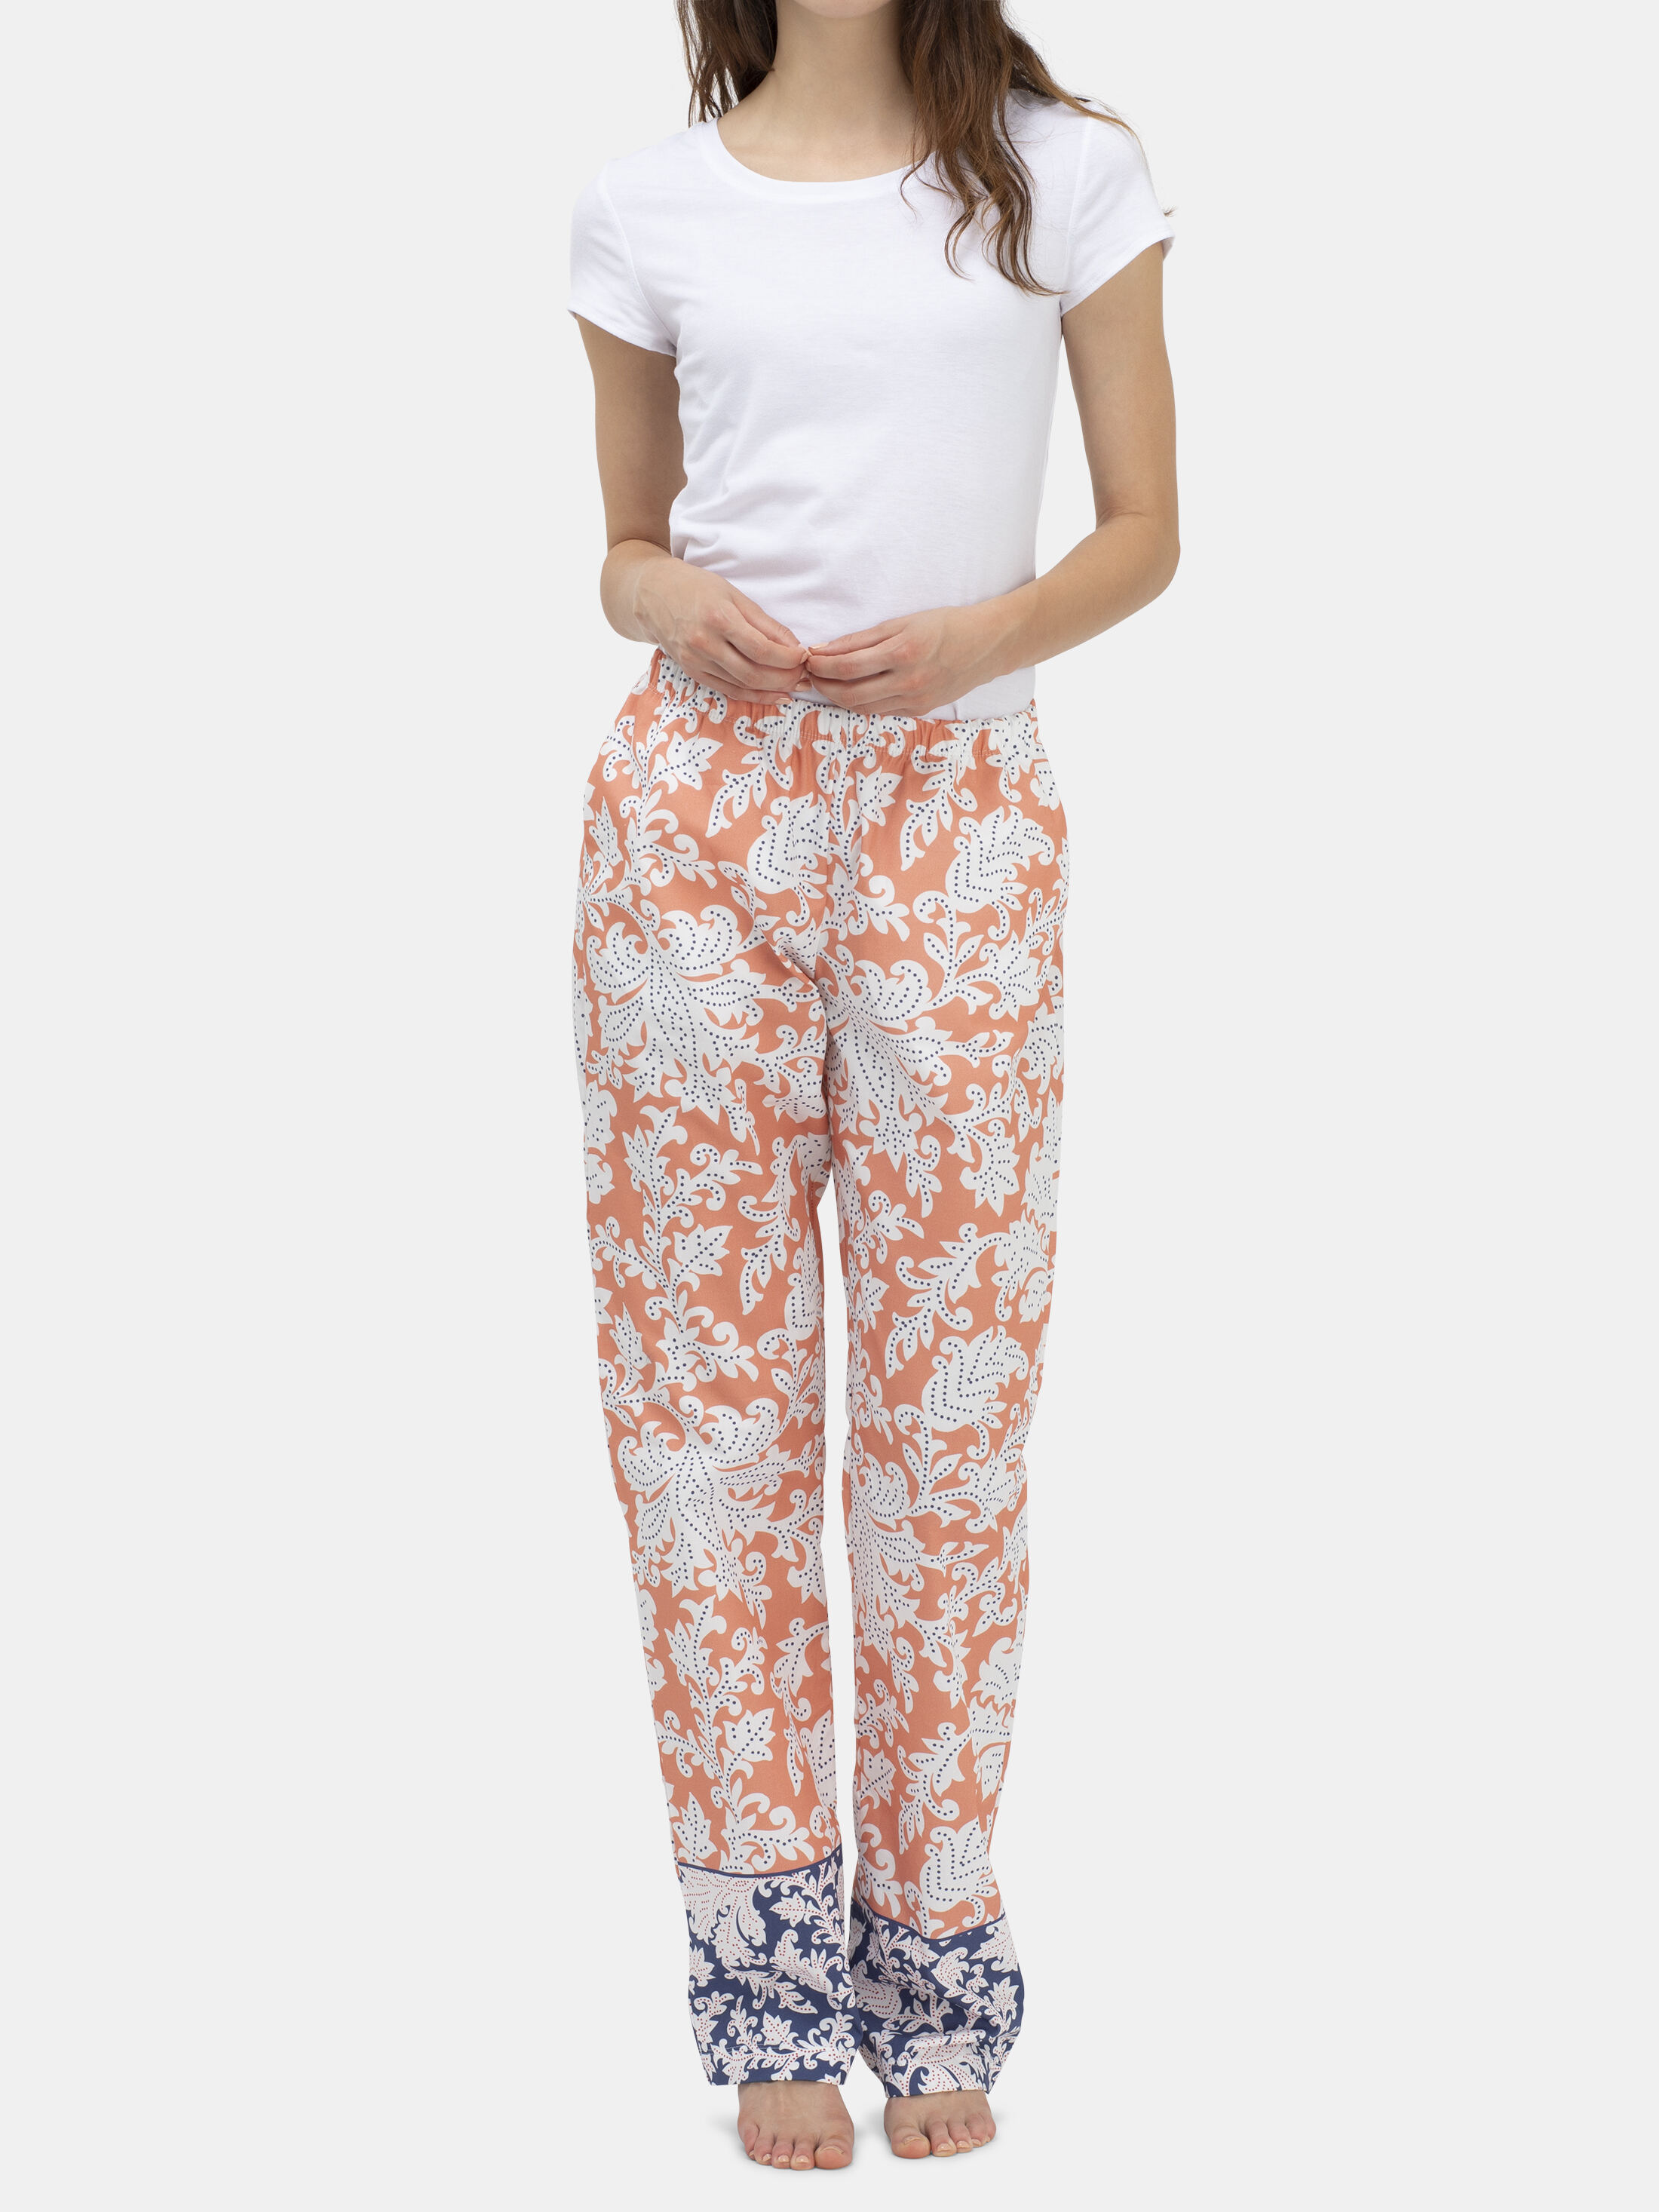 Sundrop Pajama Pants | Sparklegirl Costume and Design